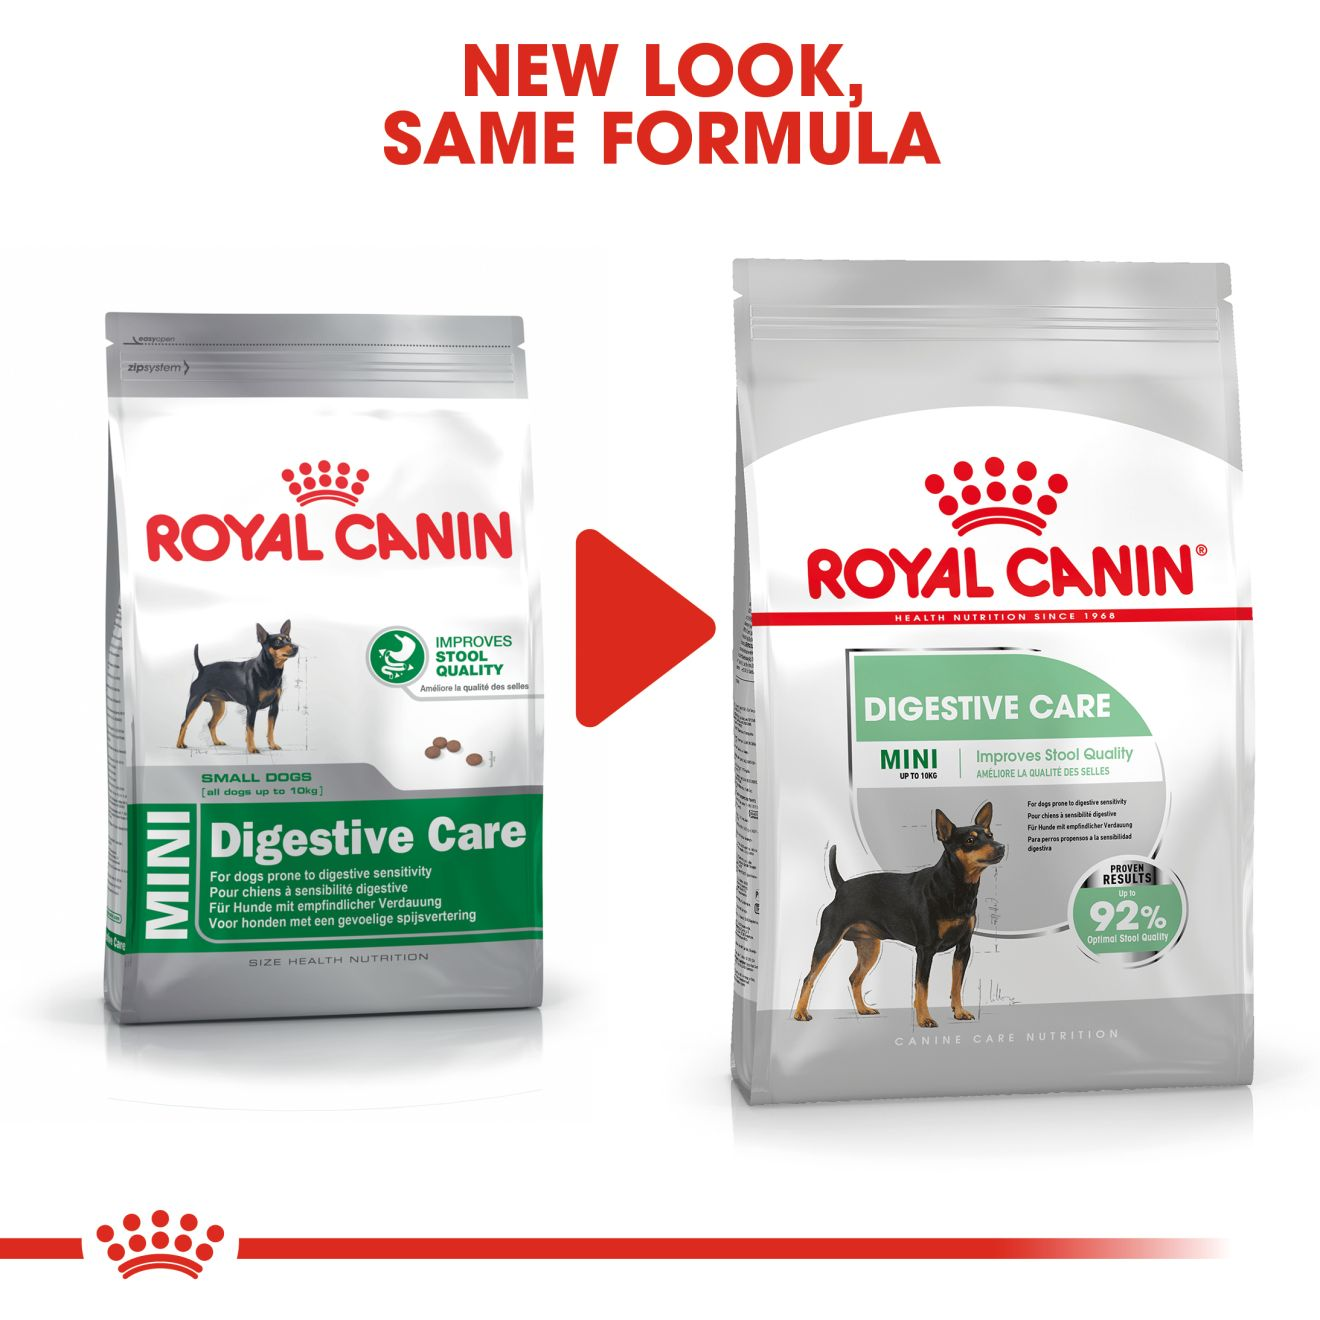 DIGESTIVE CARE | Royal Canin US